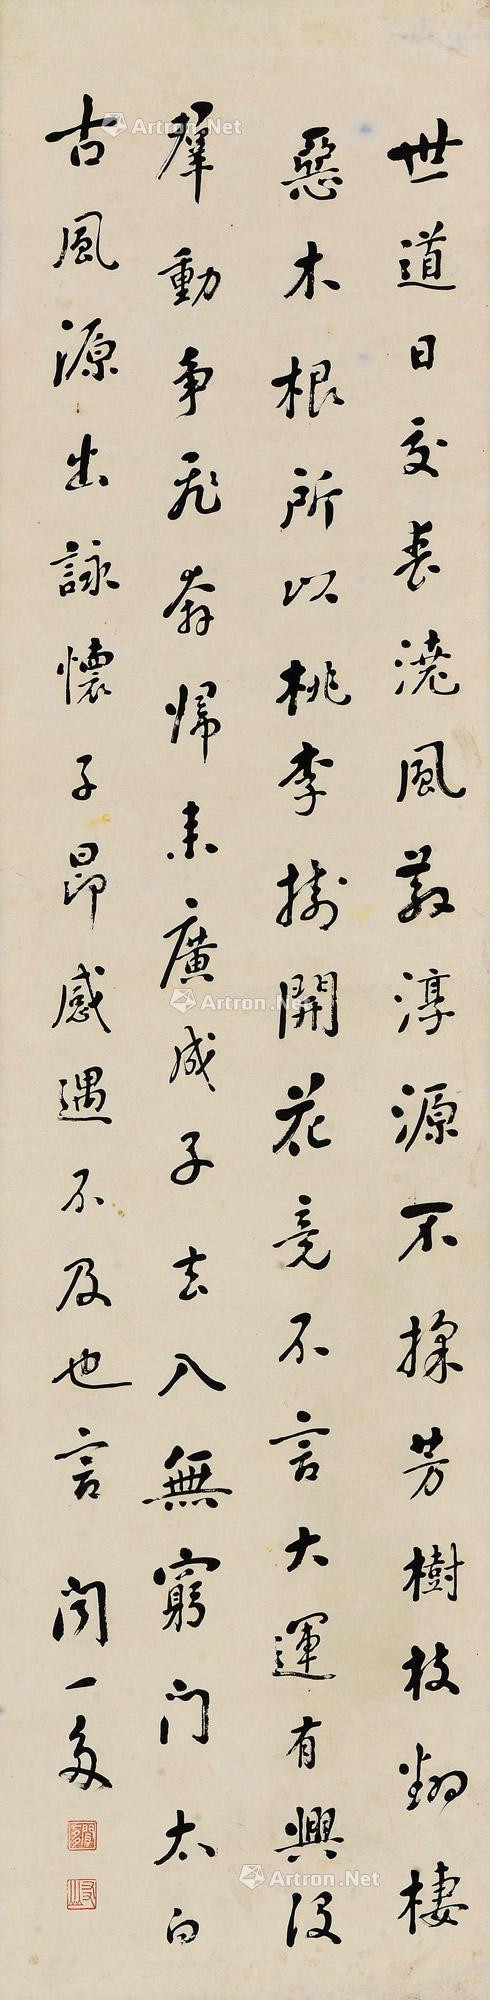 Calligraphy of Libai’s Poem